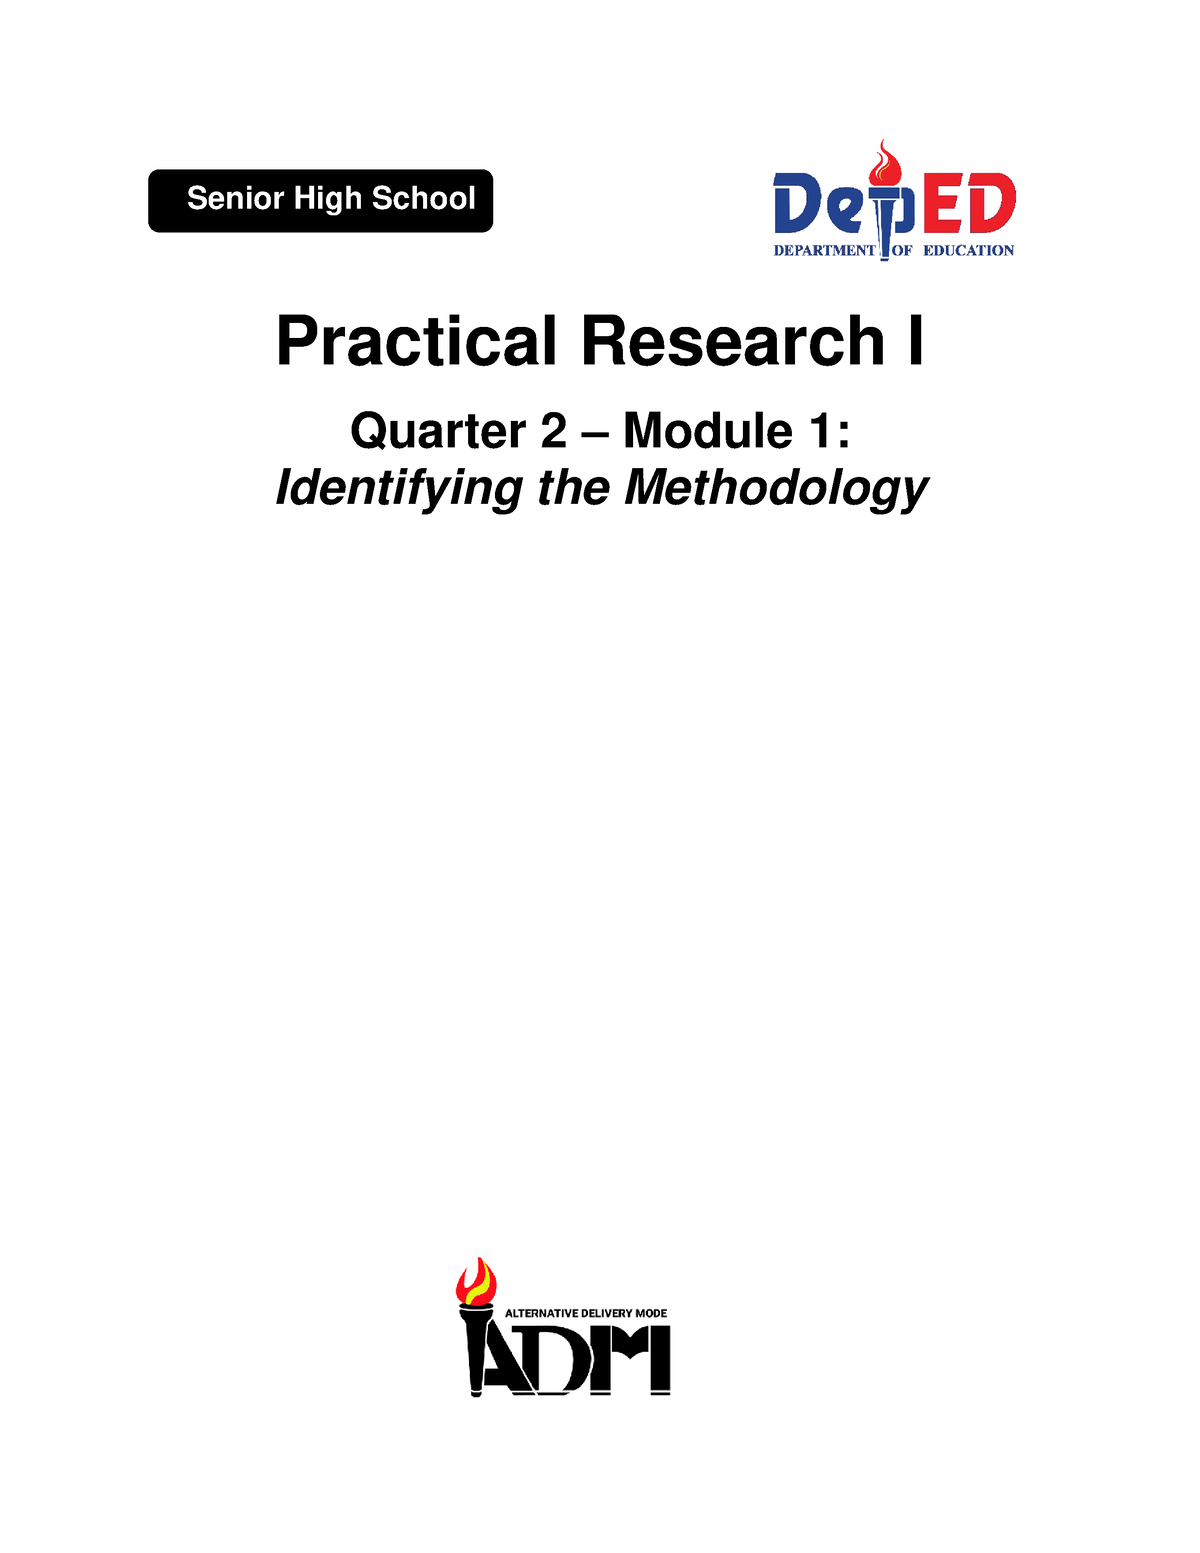 Practical Research I Quarter 2 Modules 1 Practical Research I Quarter 2 Module 1 8859